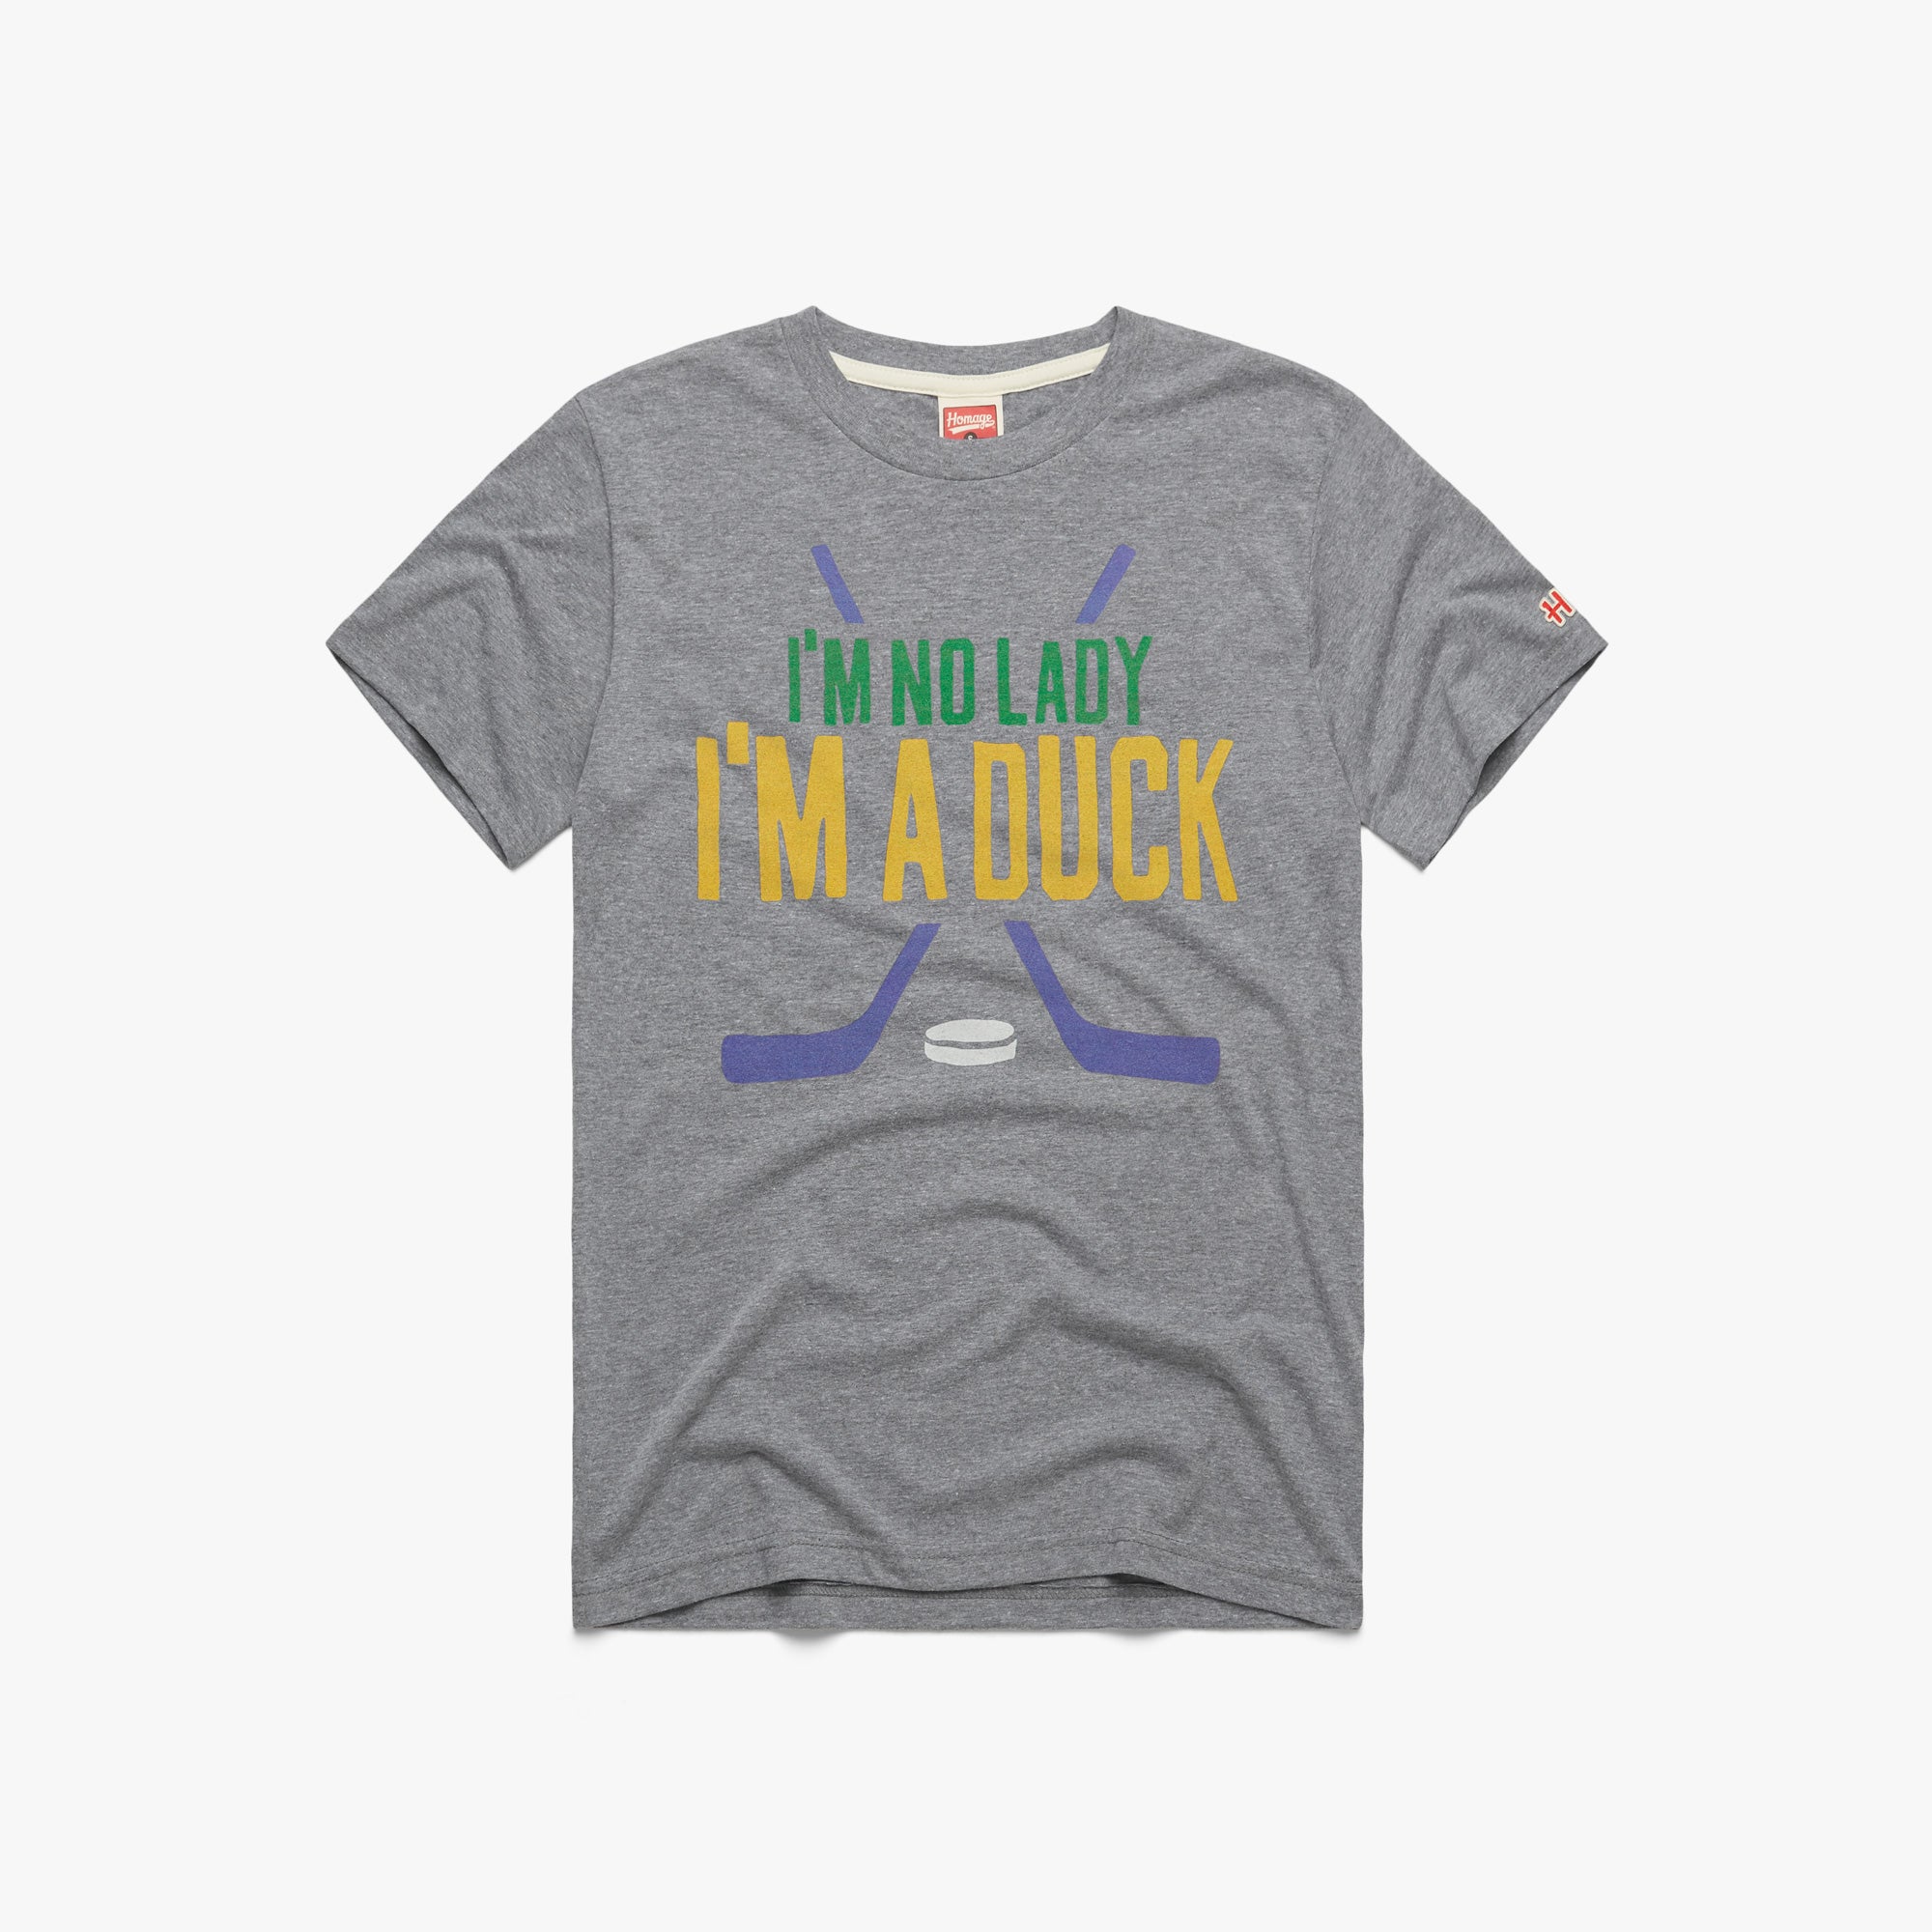 Creative & Funny Duck Shirt Dunin Ninja Duck Ninja T-Shirt M